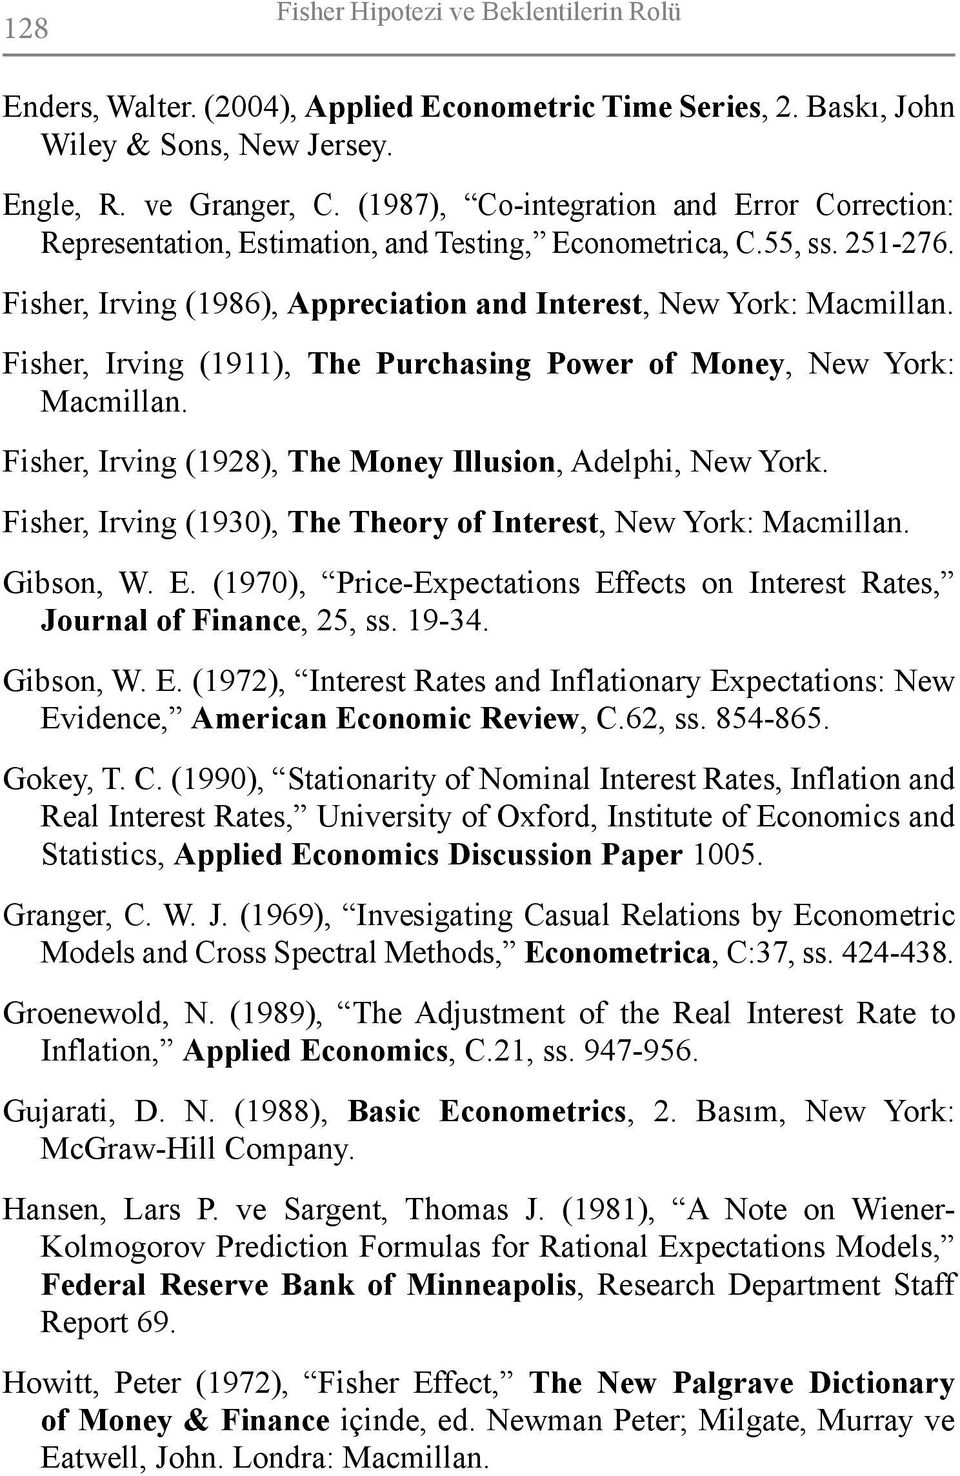 Fisher, Irving (1911), The Purchasing Power of Money, New York: Macmillan. Fisher, Irving (1928), The Money Illusion, Adelphi, New York.